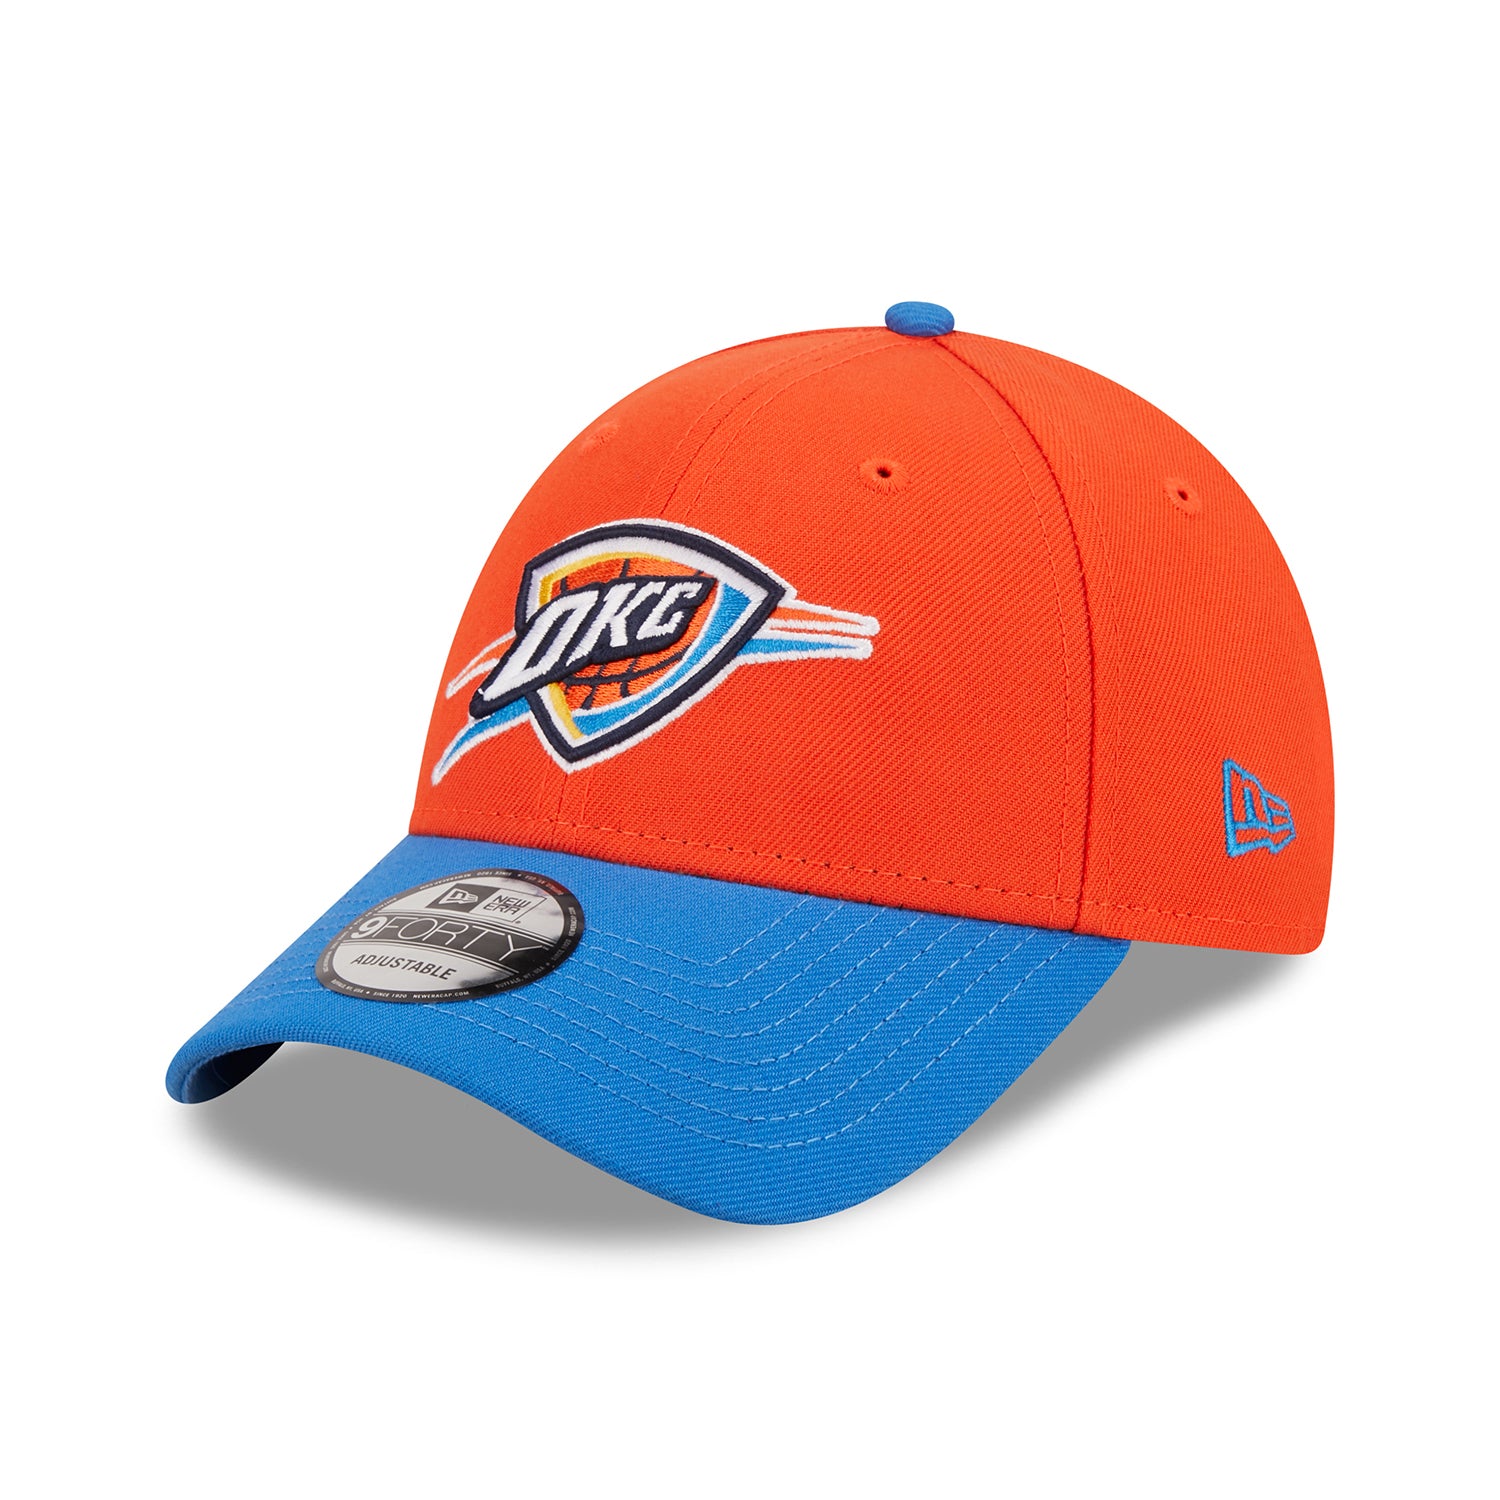 Youth New Era Blue/Orange New York Knicks Two-Tone 9FIFTY Snapback Adjustable Hat